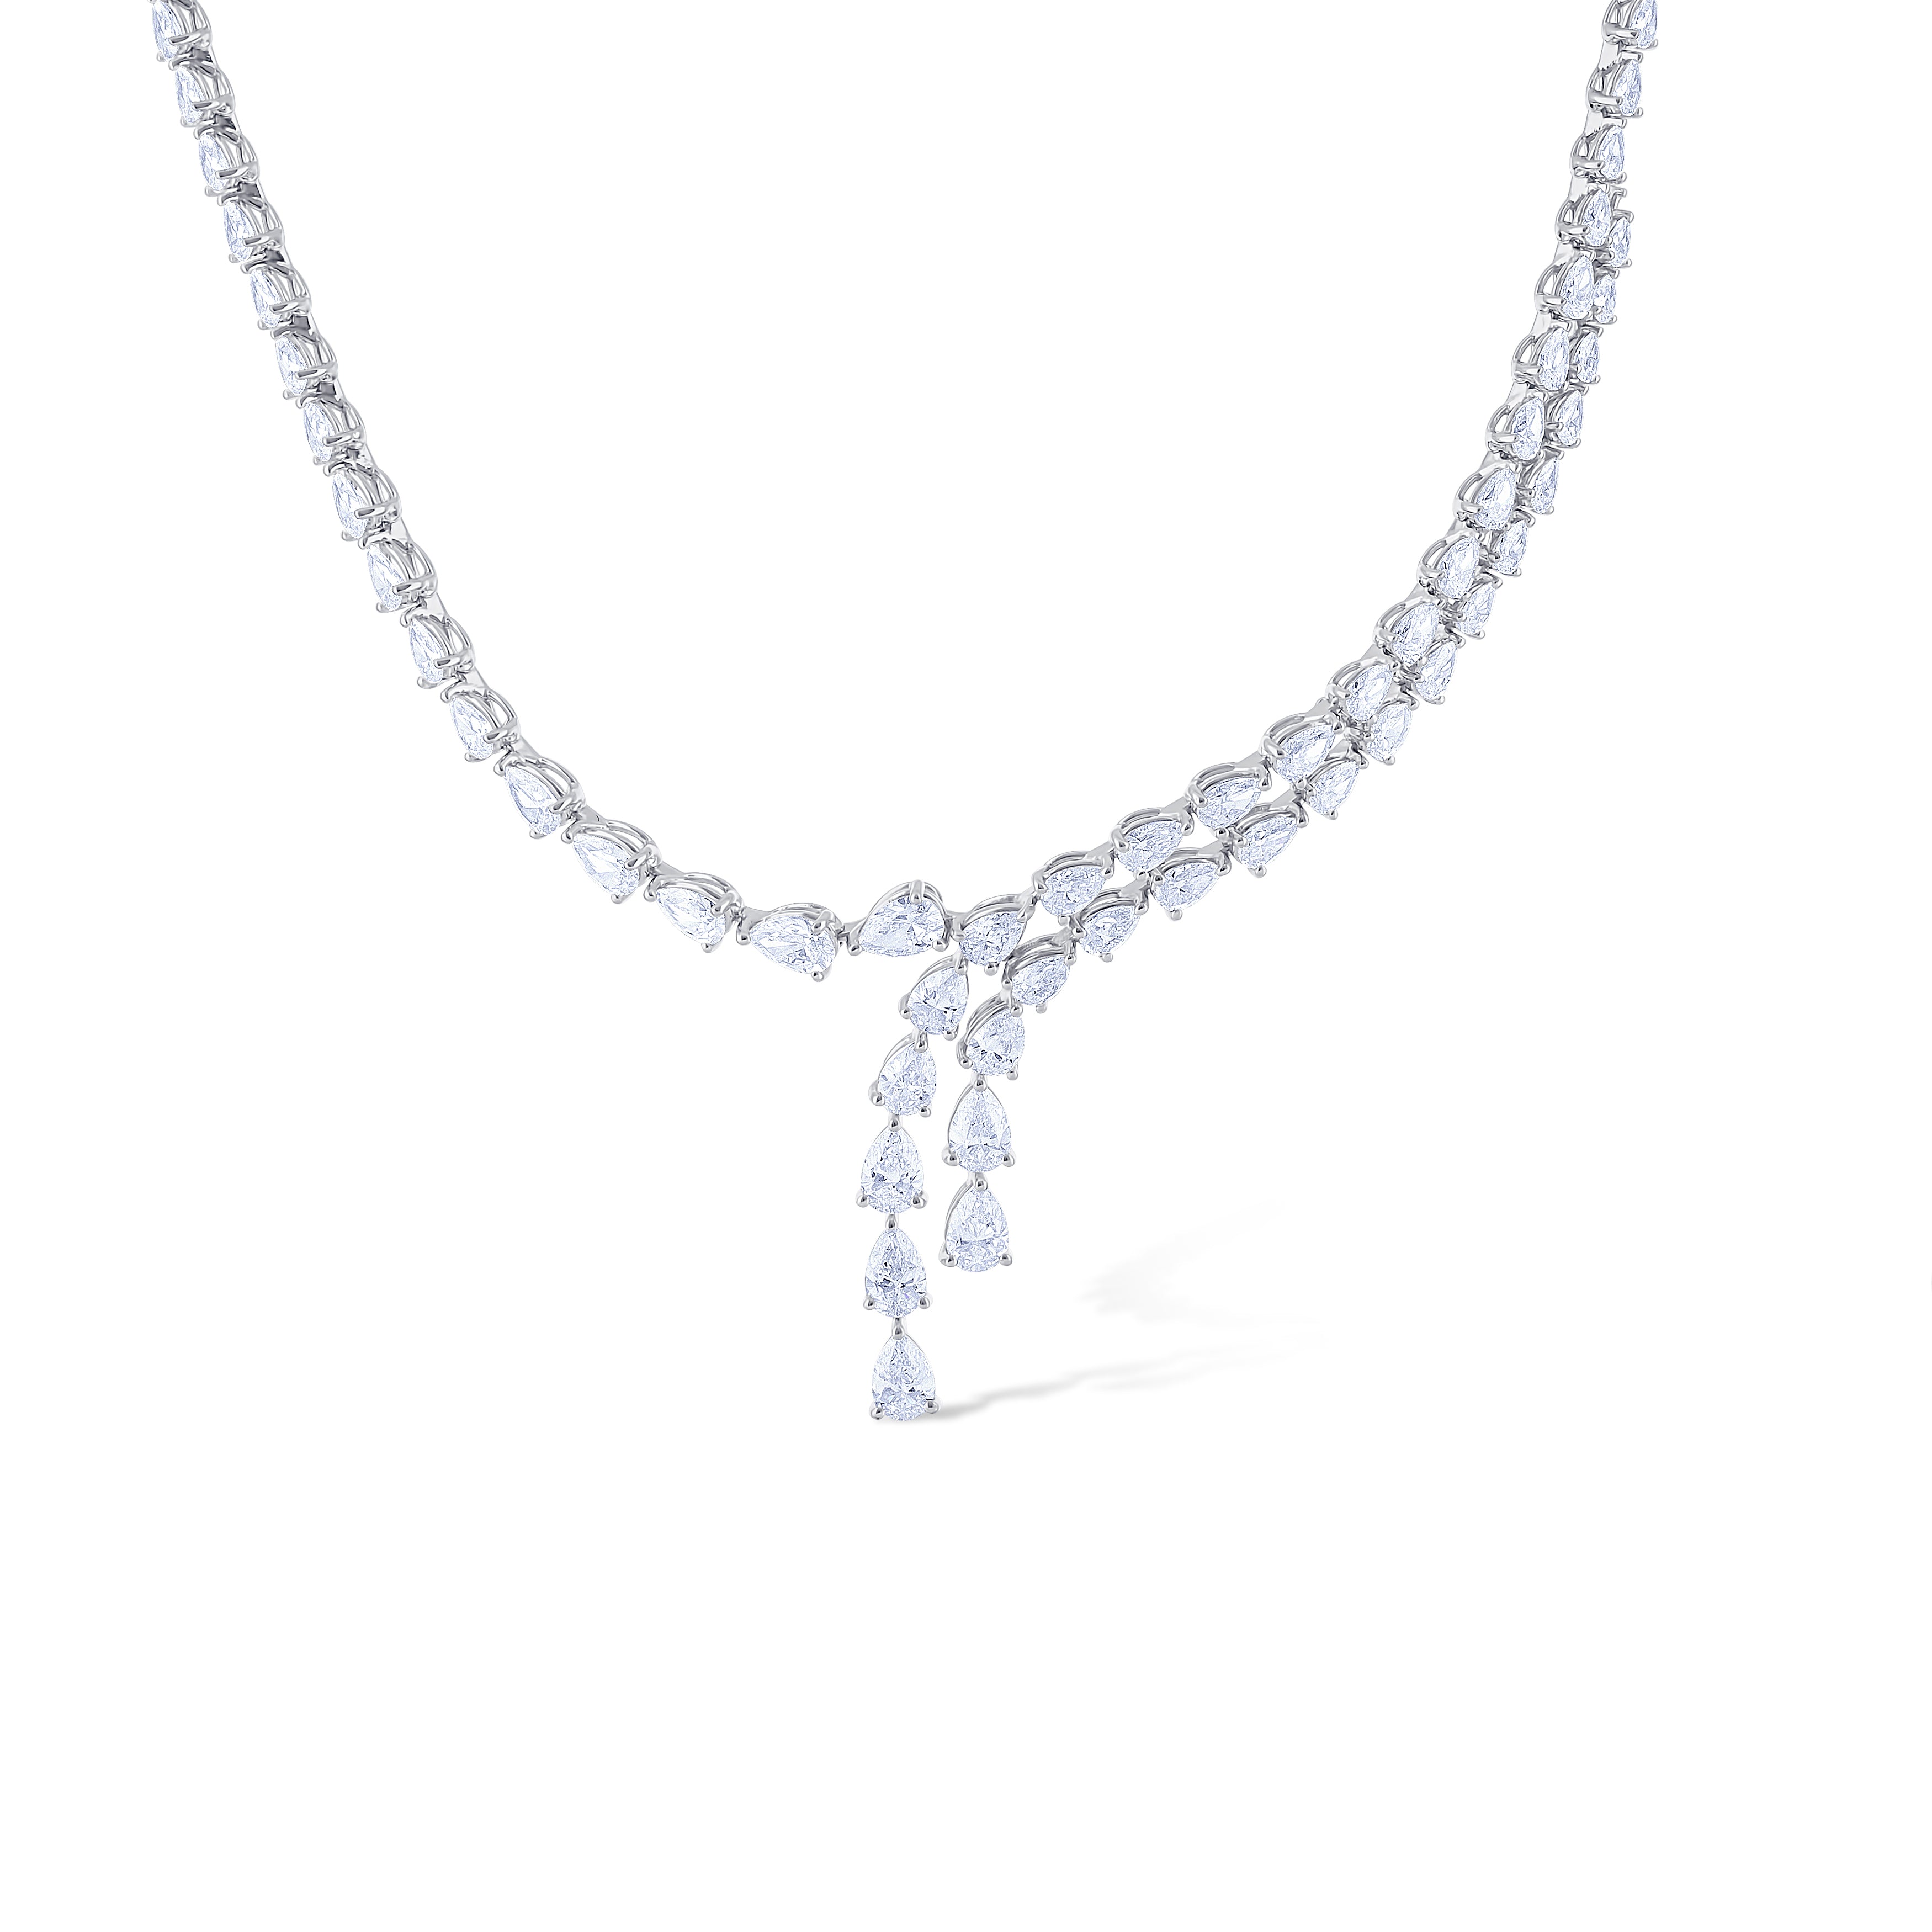 18K White Gold Pear Cut Diamond Necklace